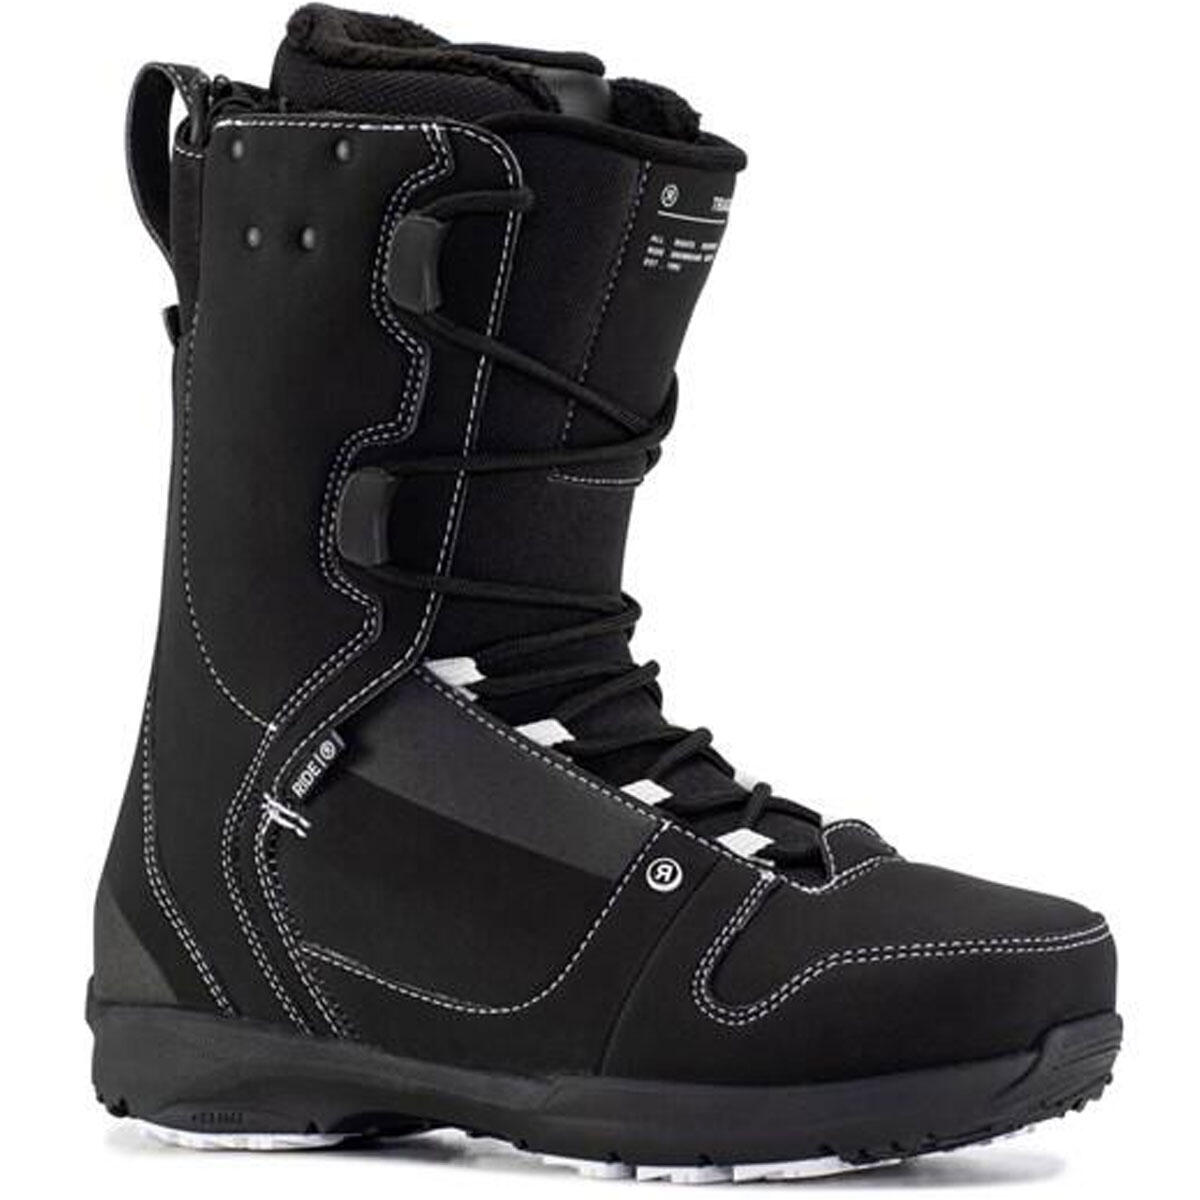 2021 Triad Boots Black - Snow | Hyper Ride